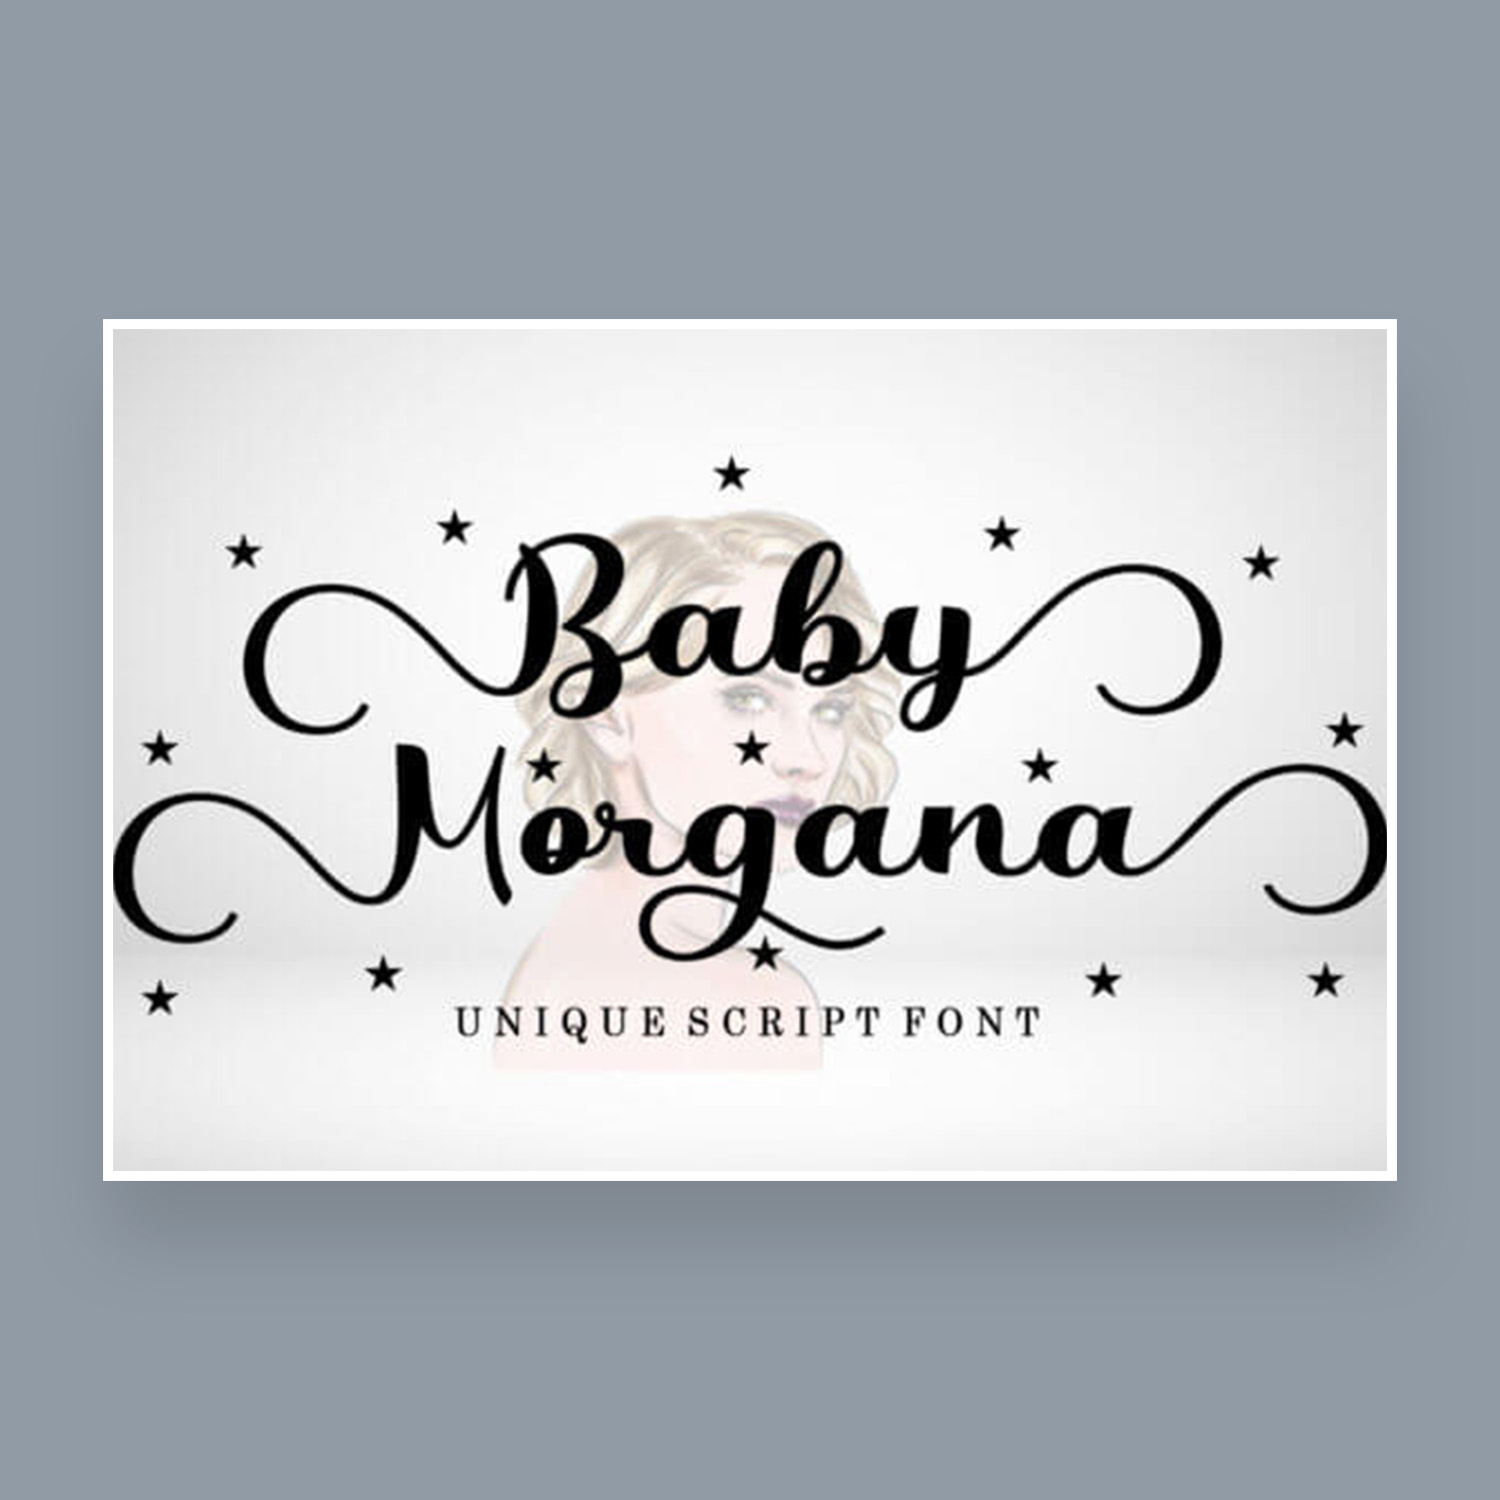 baby morgana modern magical handwritten font cover image.